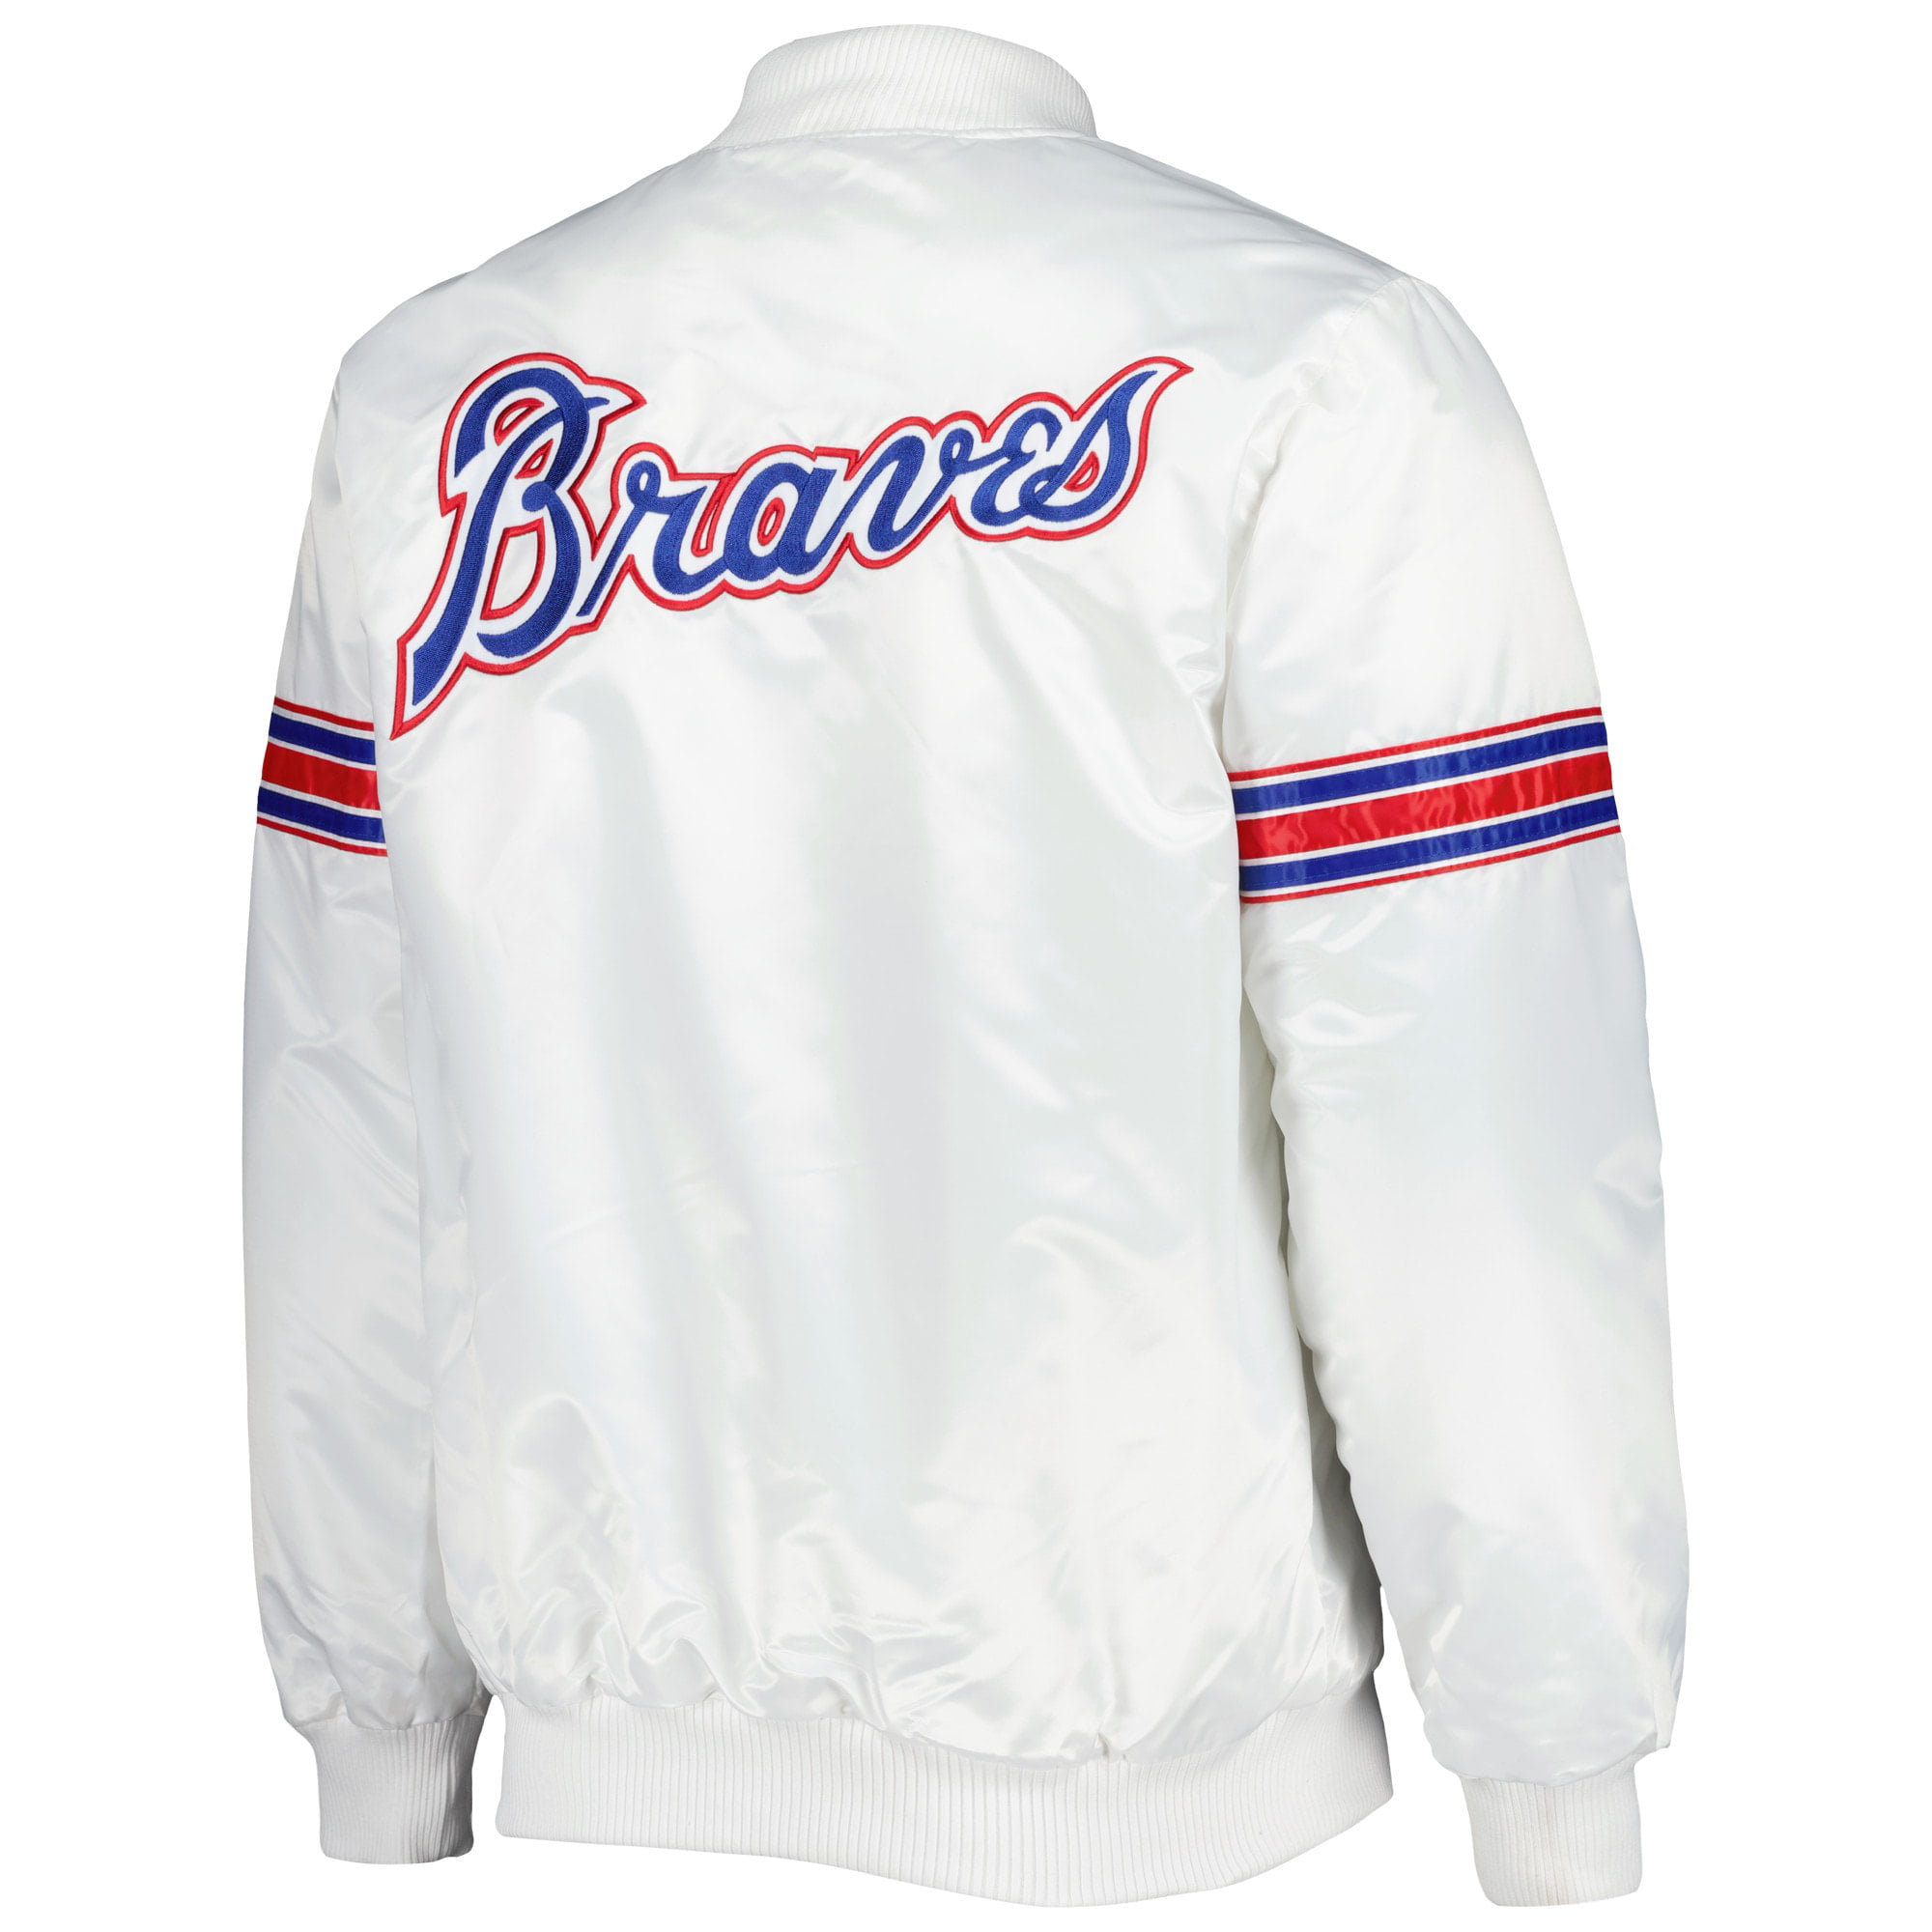 Vintage MLB Team Atlanta Braves Leather Jacket - Maker of Jacket